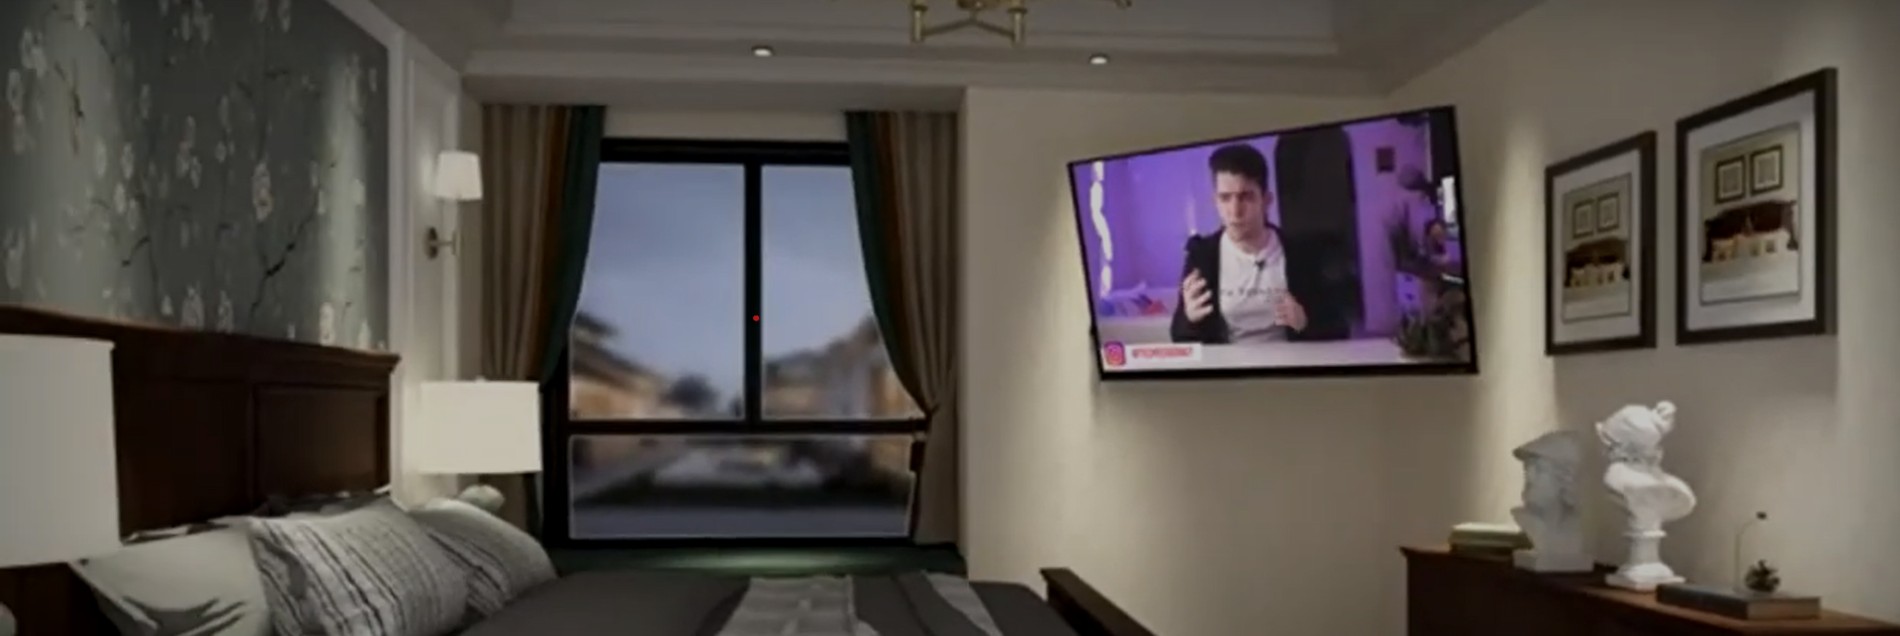 Tv Wall Mounting Custom Viewing Angles And Ergonomic Setup